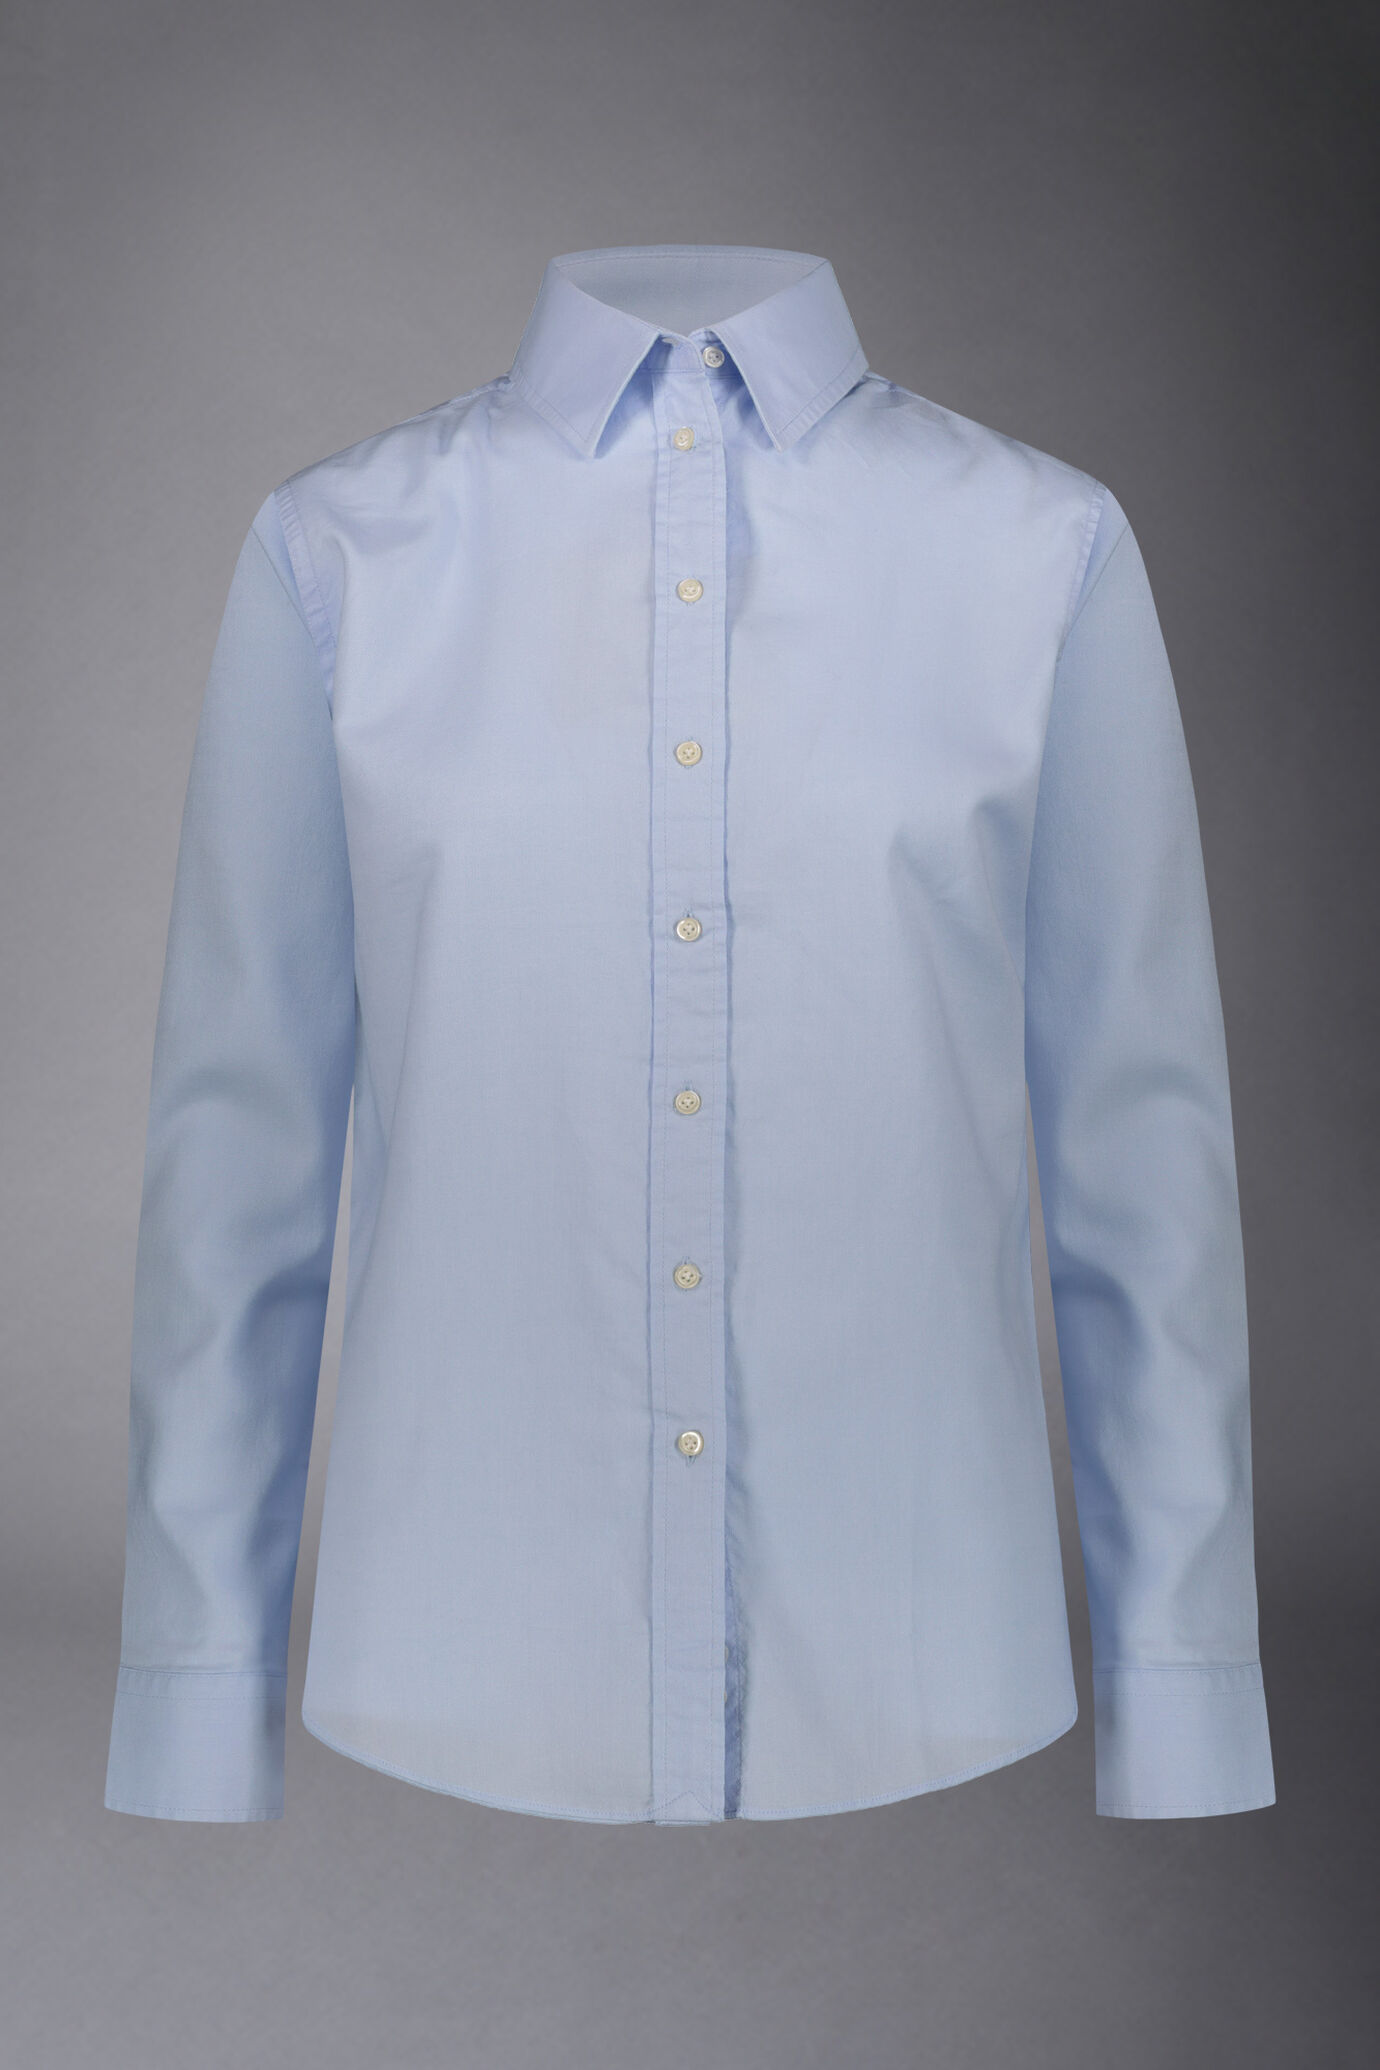 Classic superlight oxford cotton regular fit shirt